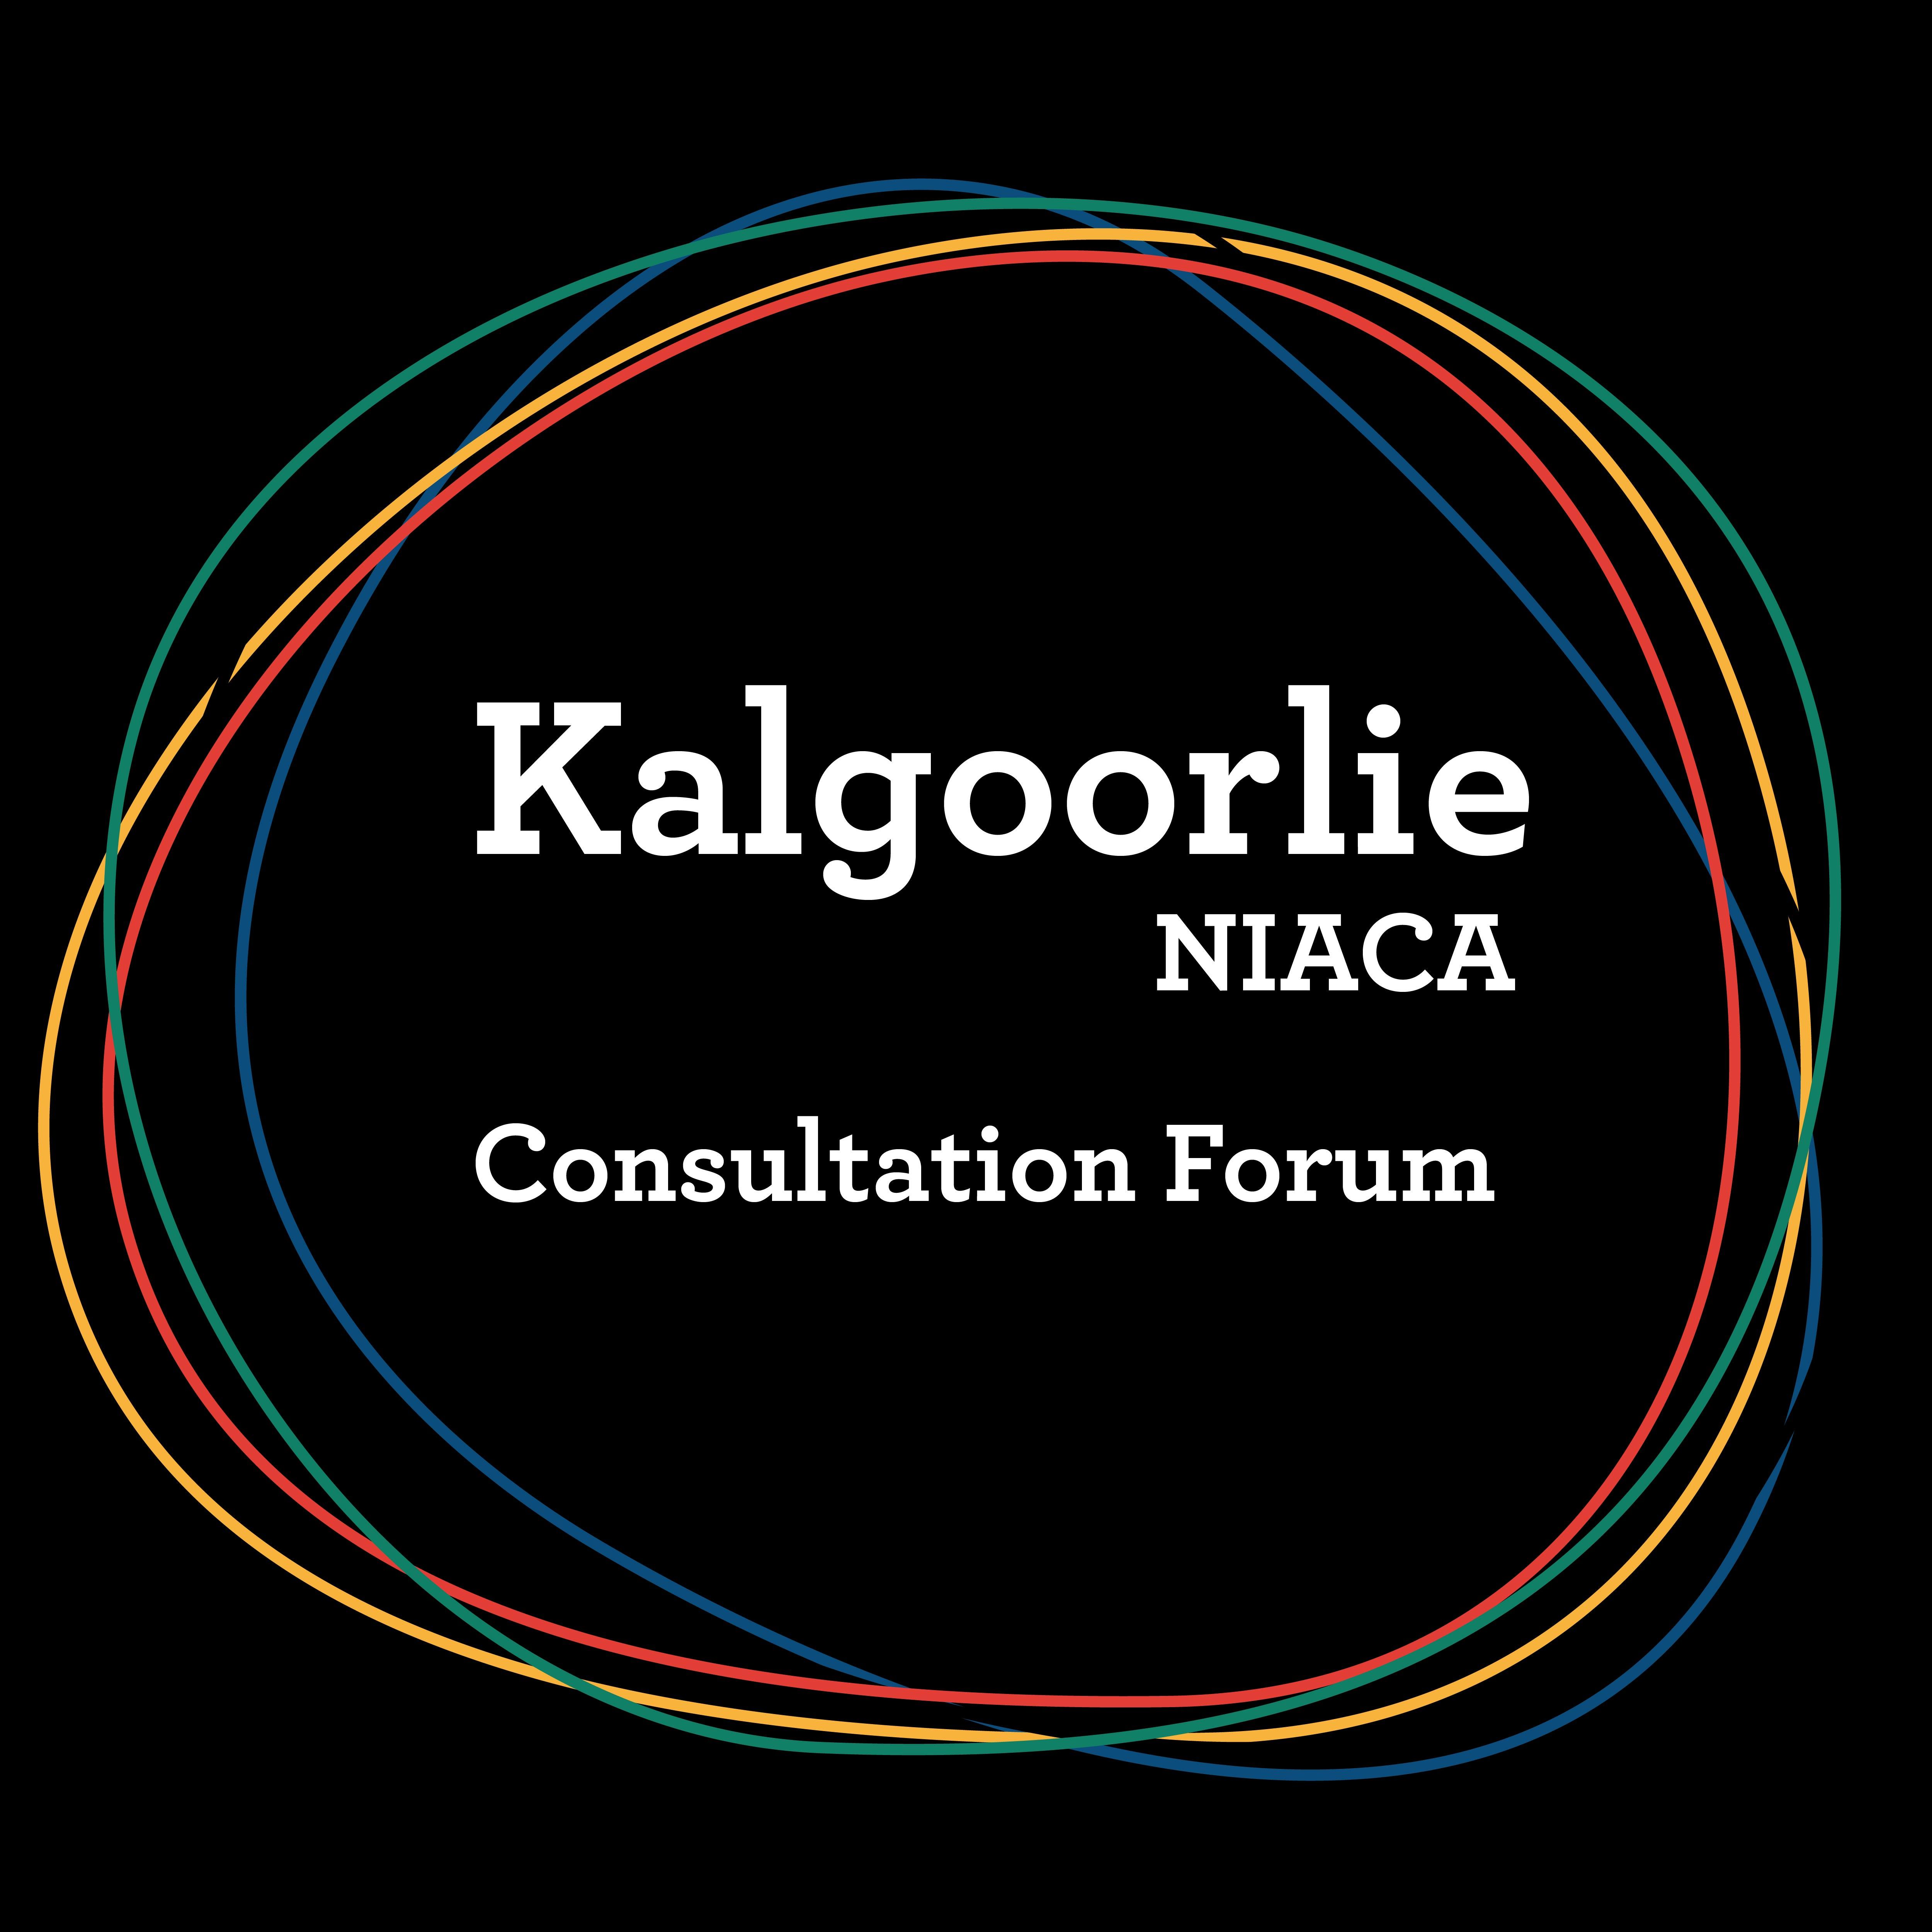 Kalgoorlie- NIACA Consultation Forum